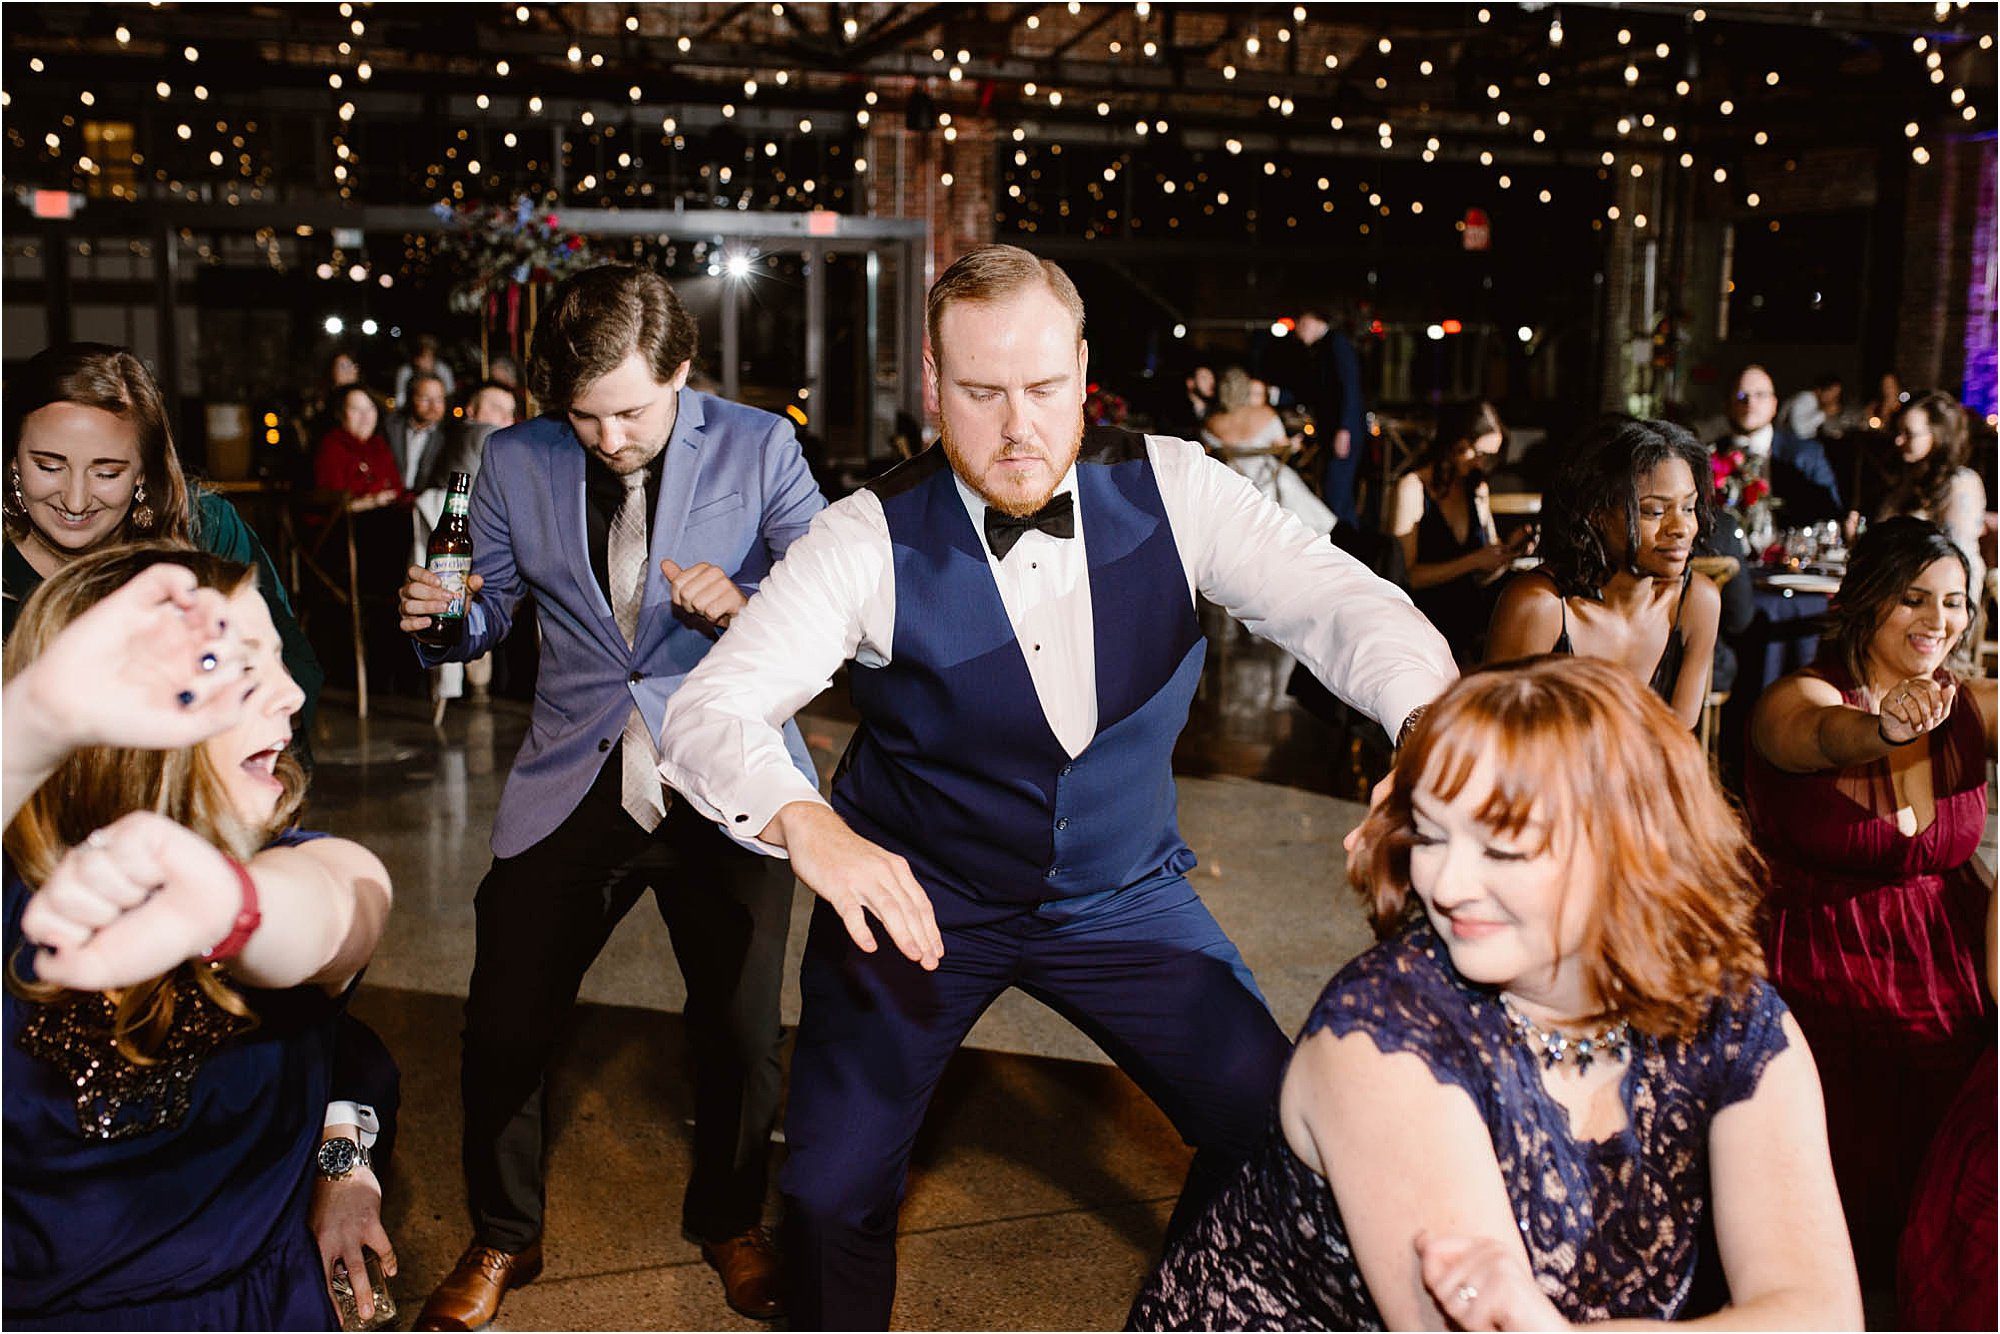 fun winter wedding reception dancing photos